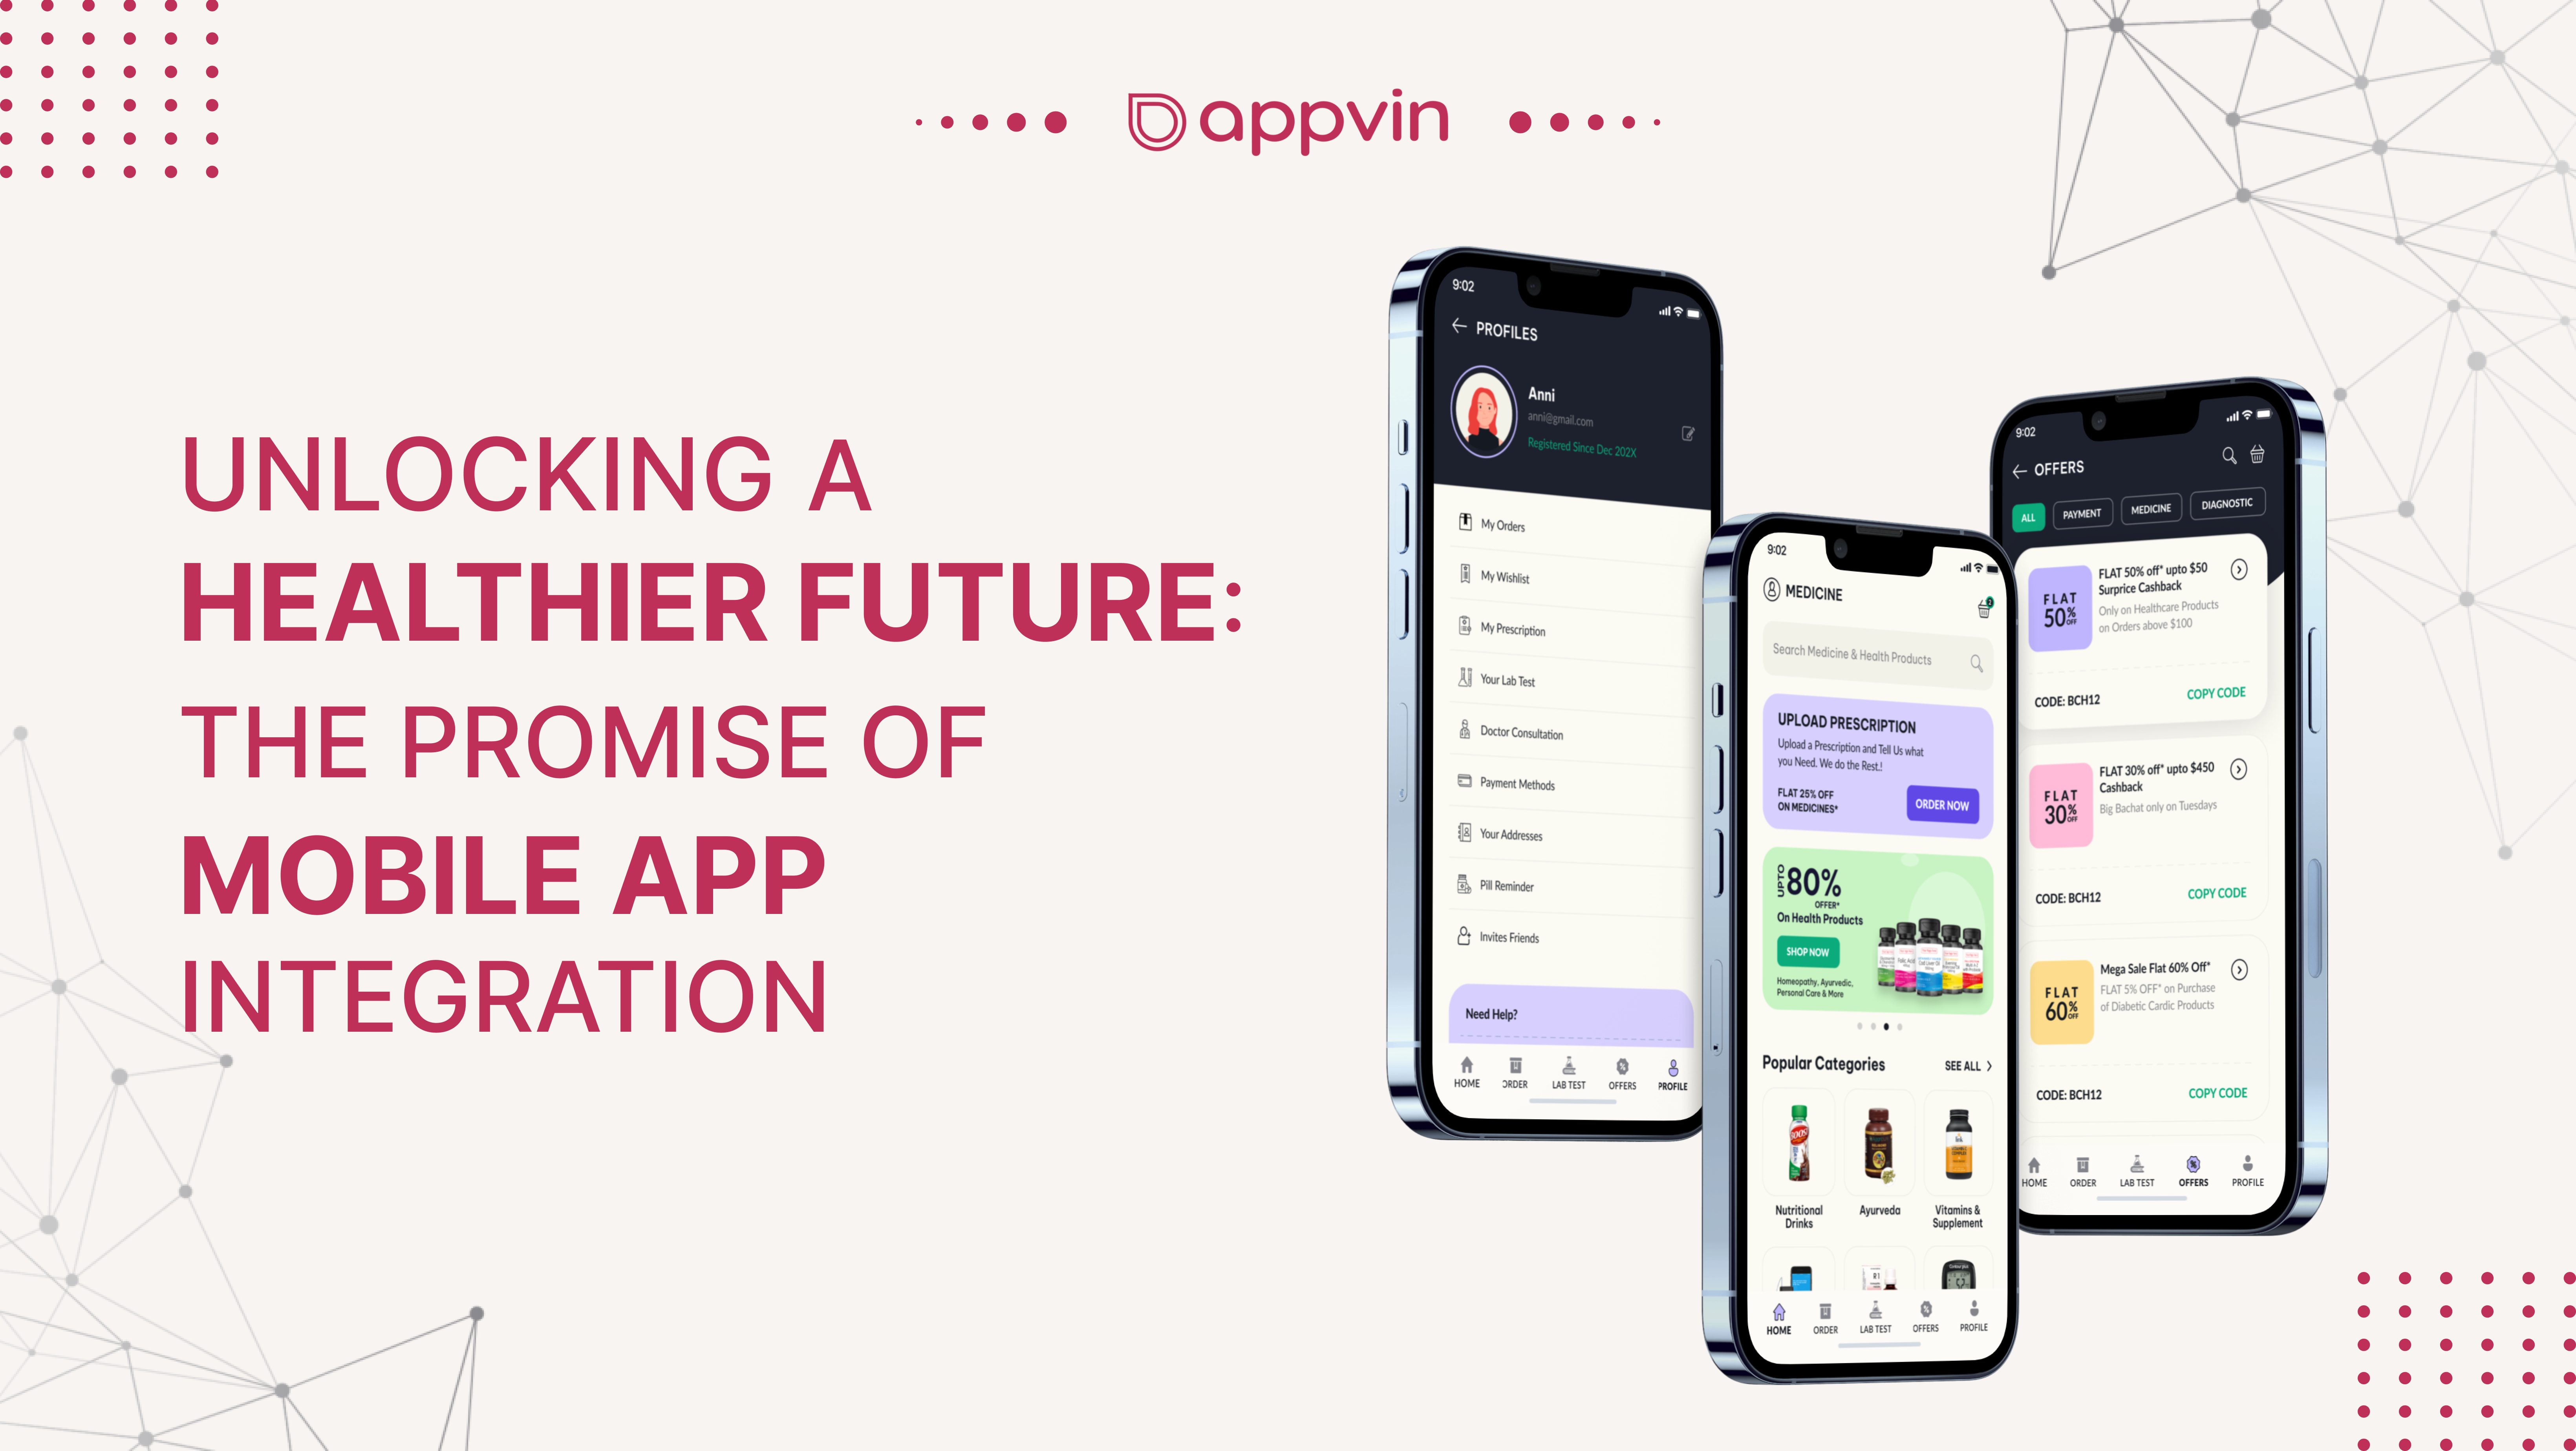 Mobile-App-Integration-AppVin-Technologies